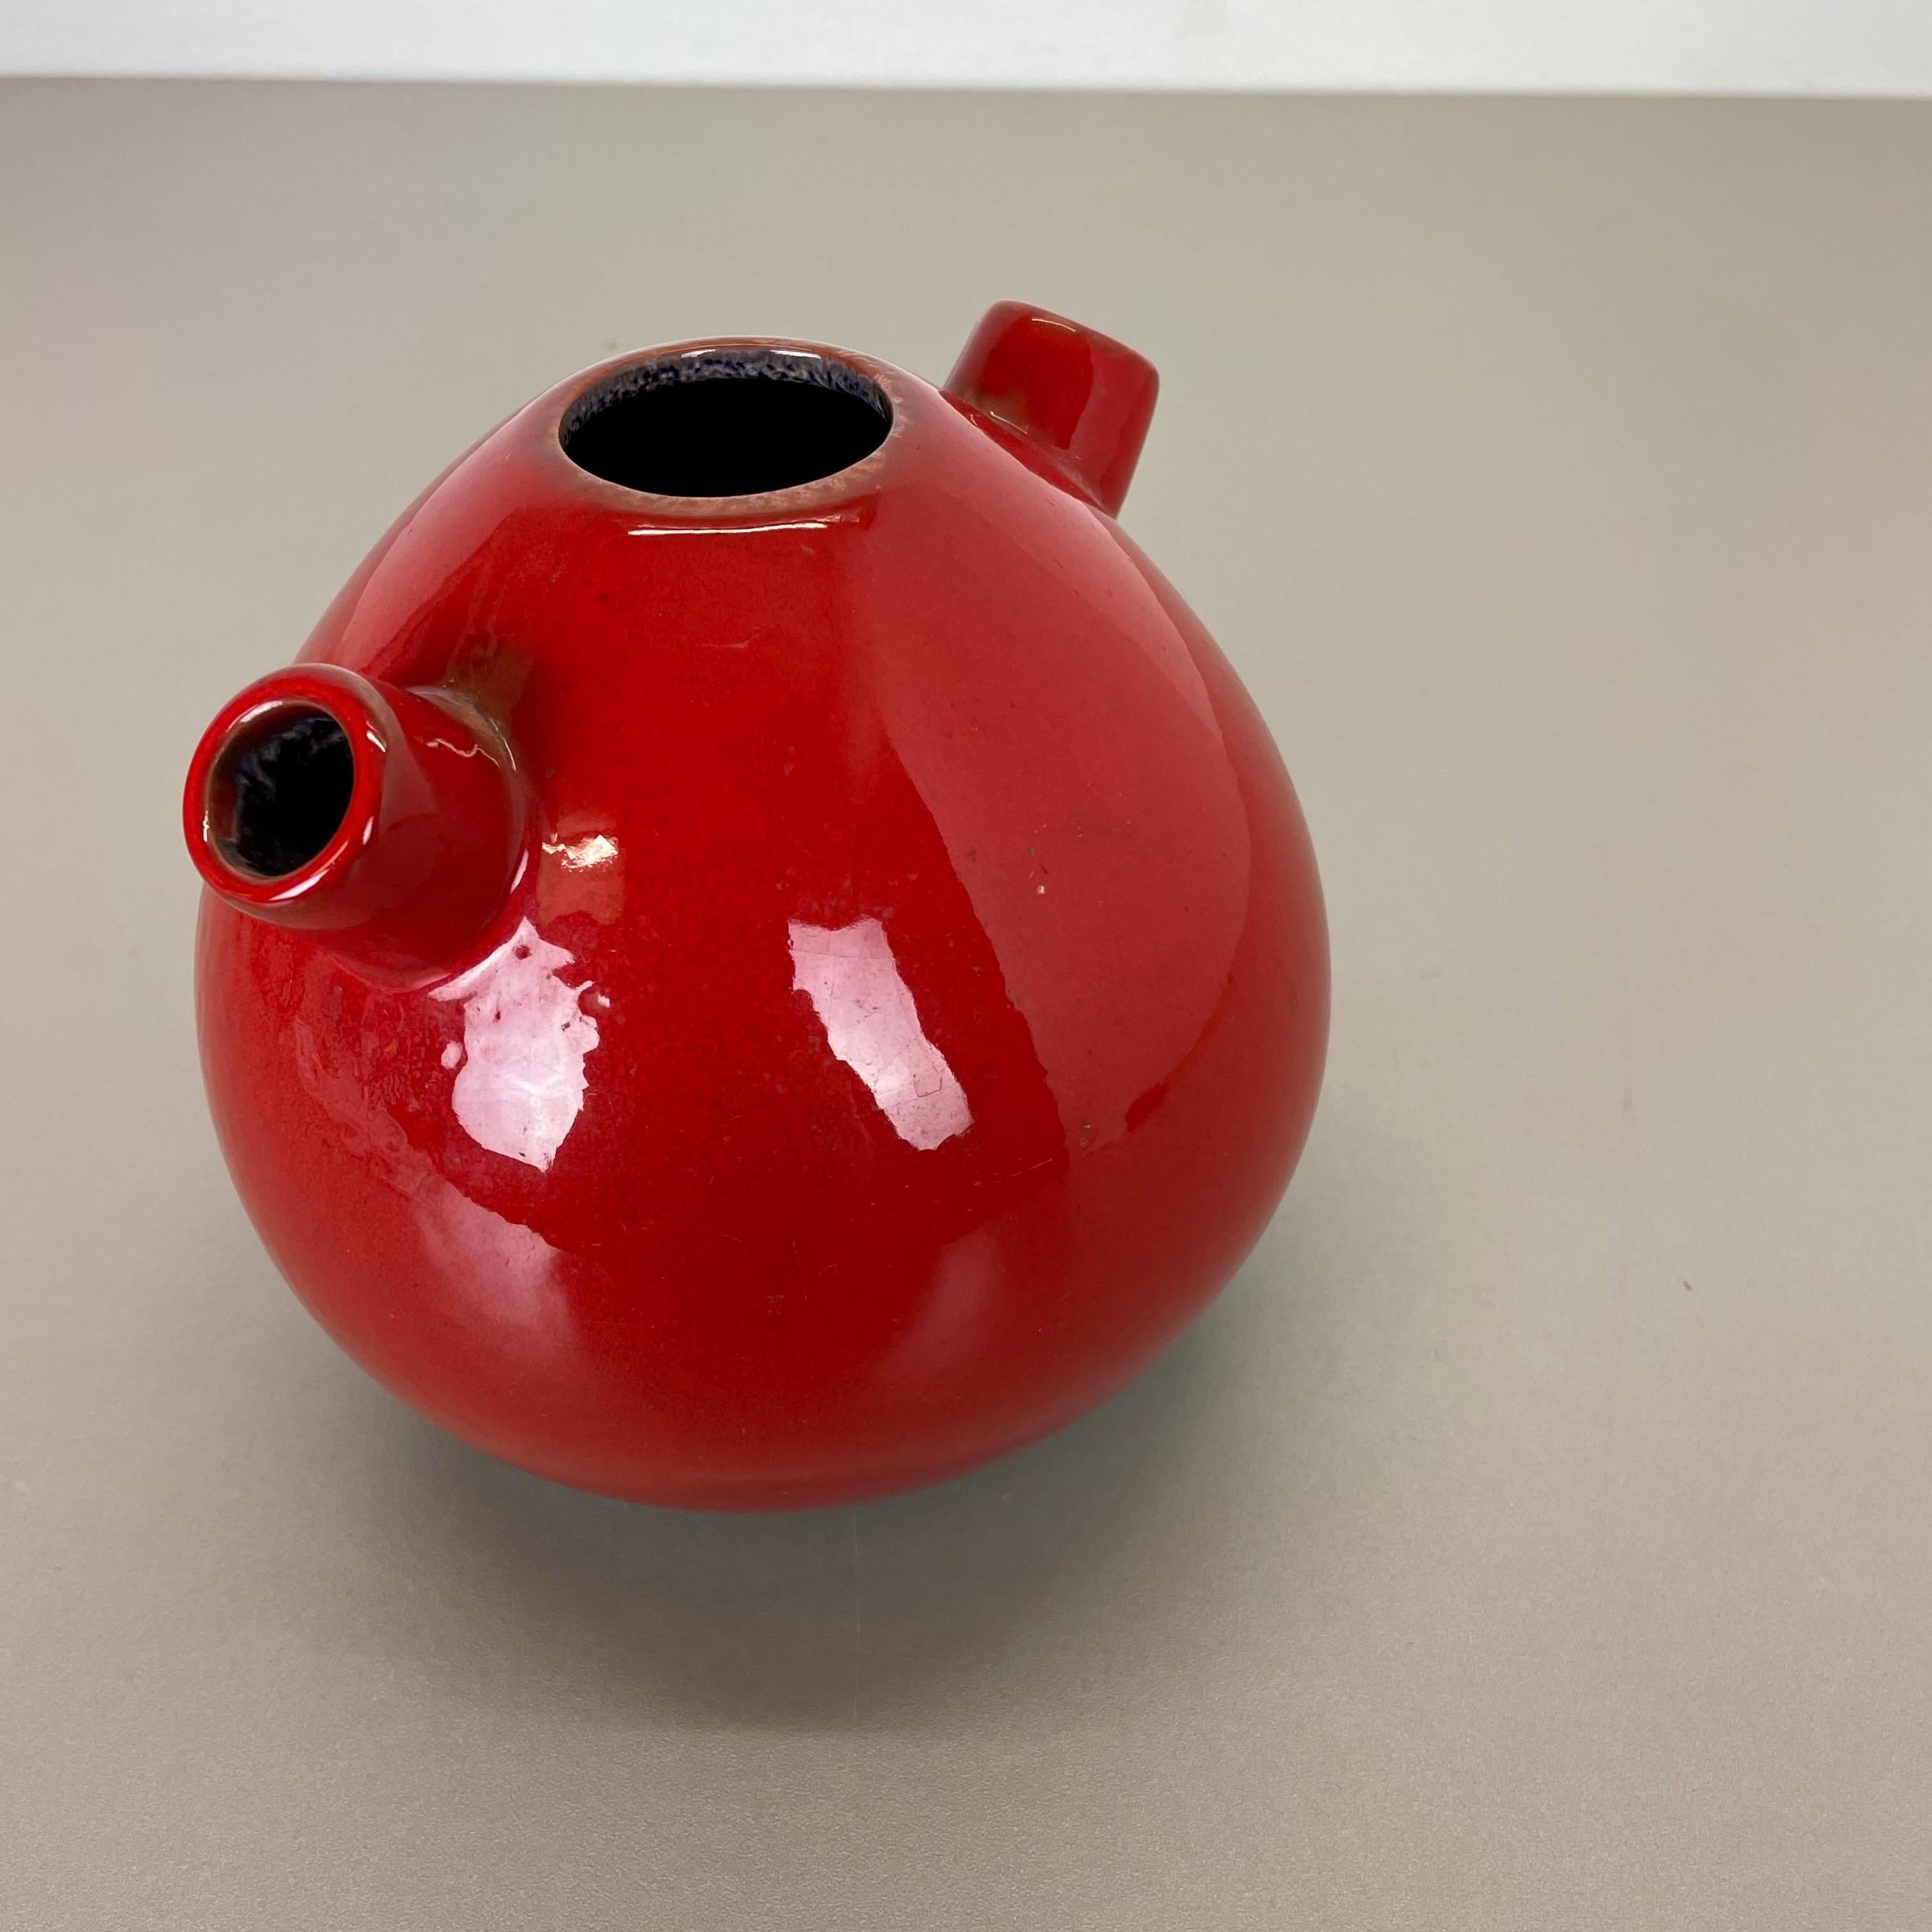 Original 1970 Red Ceramic Studio Pottery Vase by Marei Ceramics, Germany For Sale 9